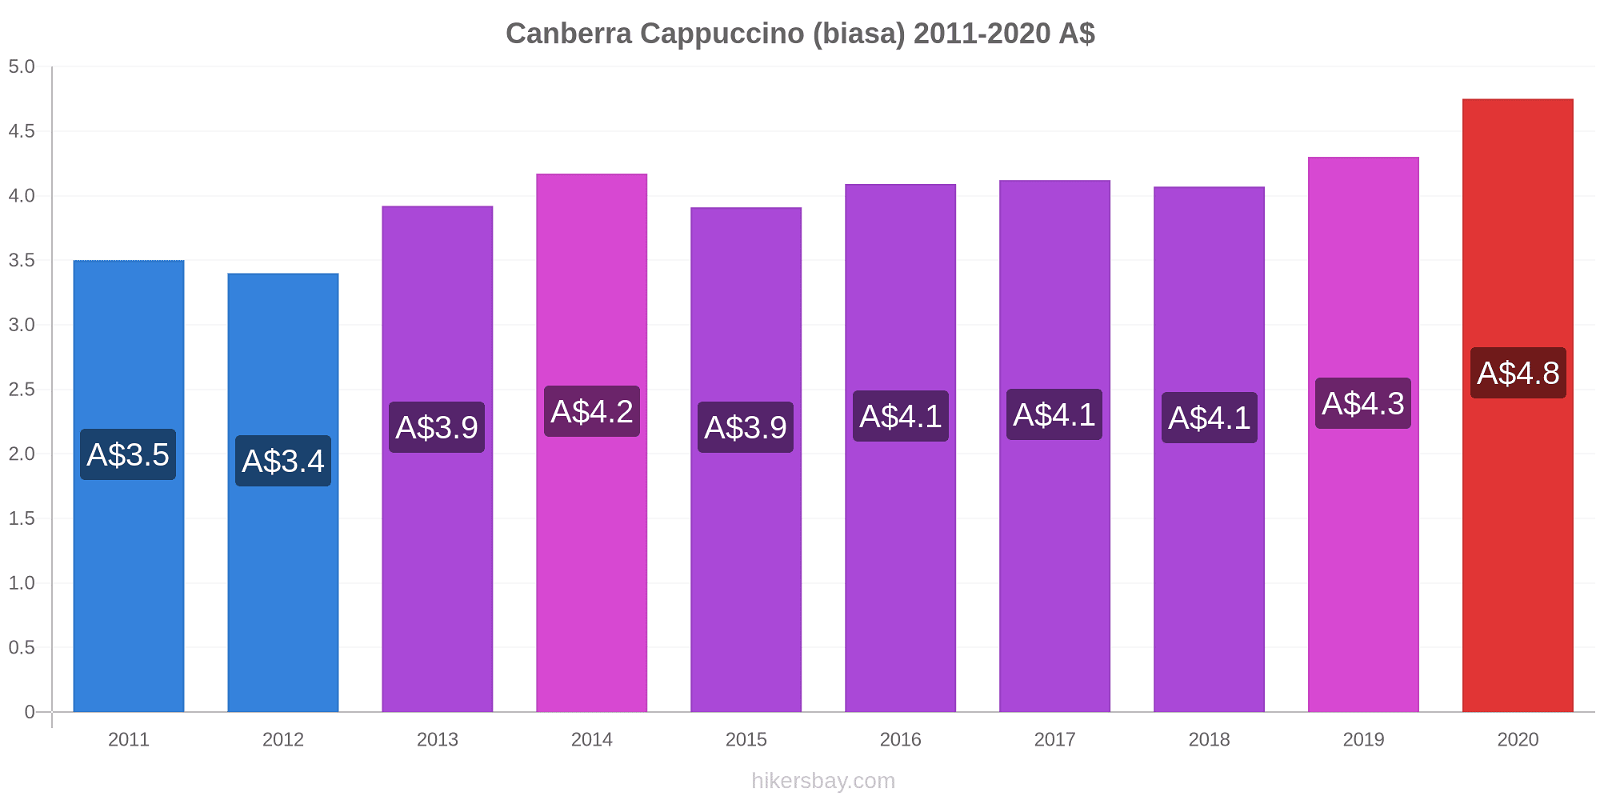 Canberra perubahan harga Cappuccino (biasa) hikersbay.com